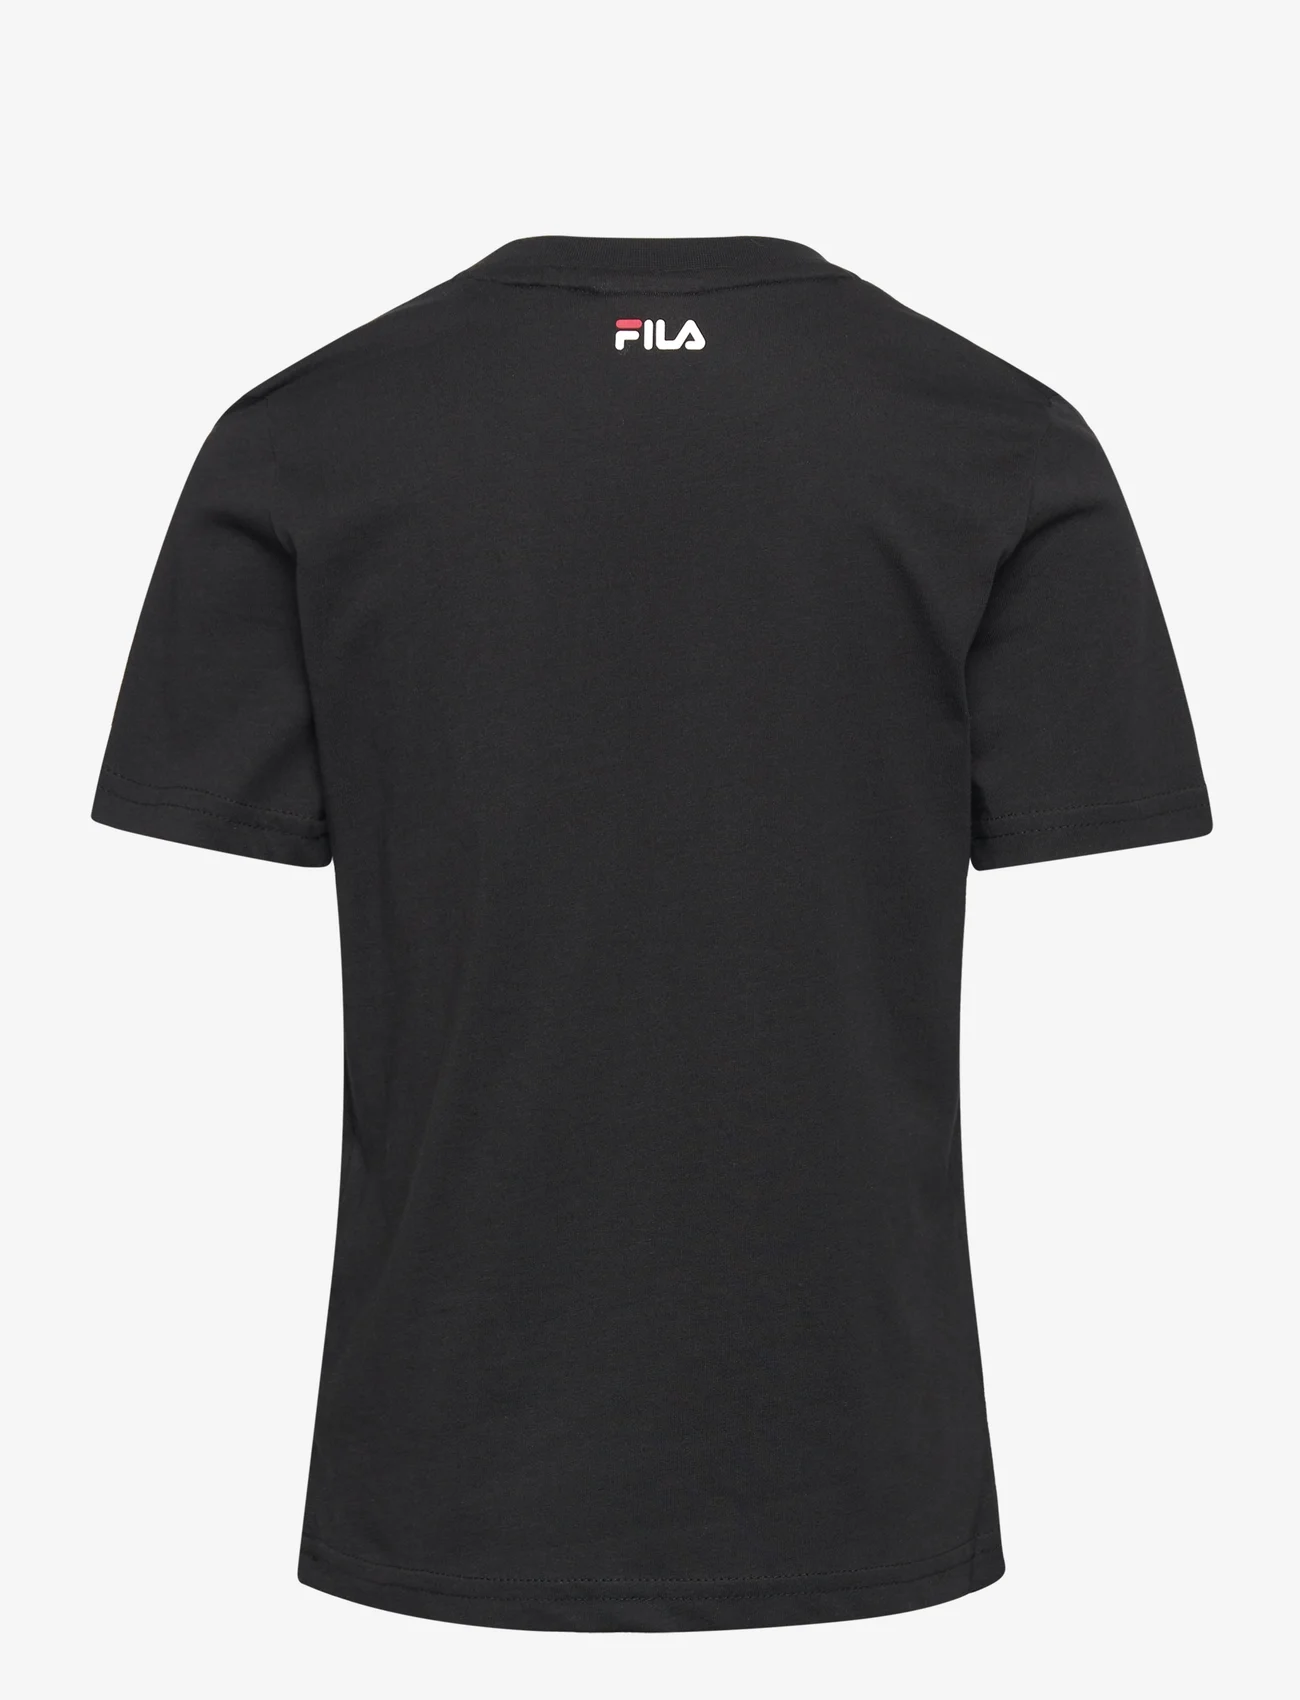 FILA - BAIA MARE classic logo tee - kurzärmelig - black - 1